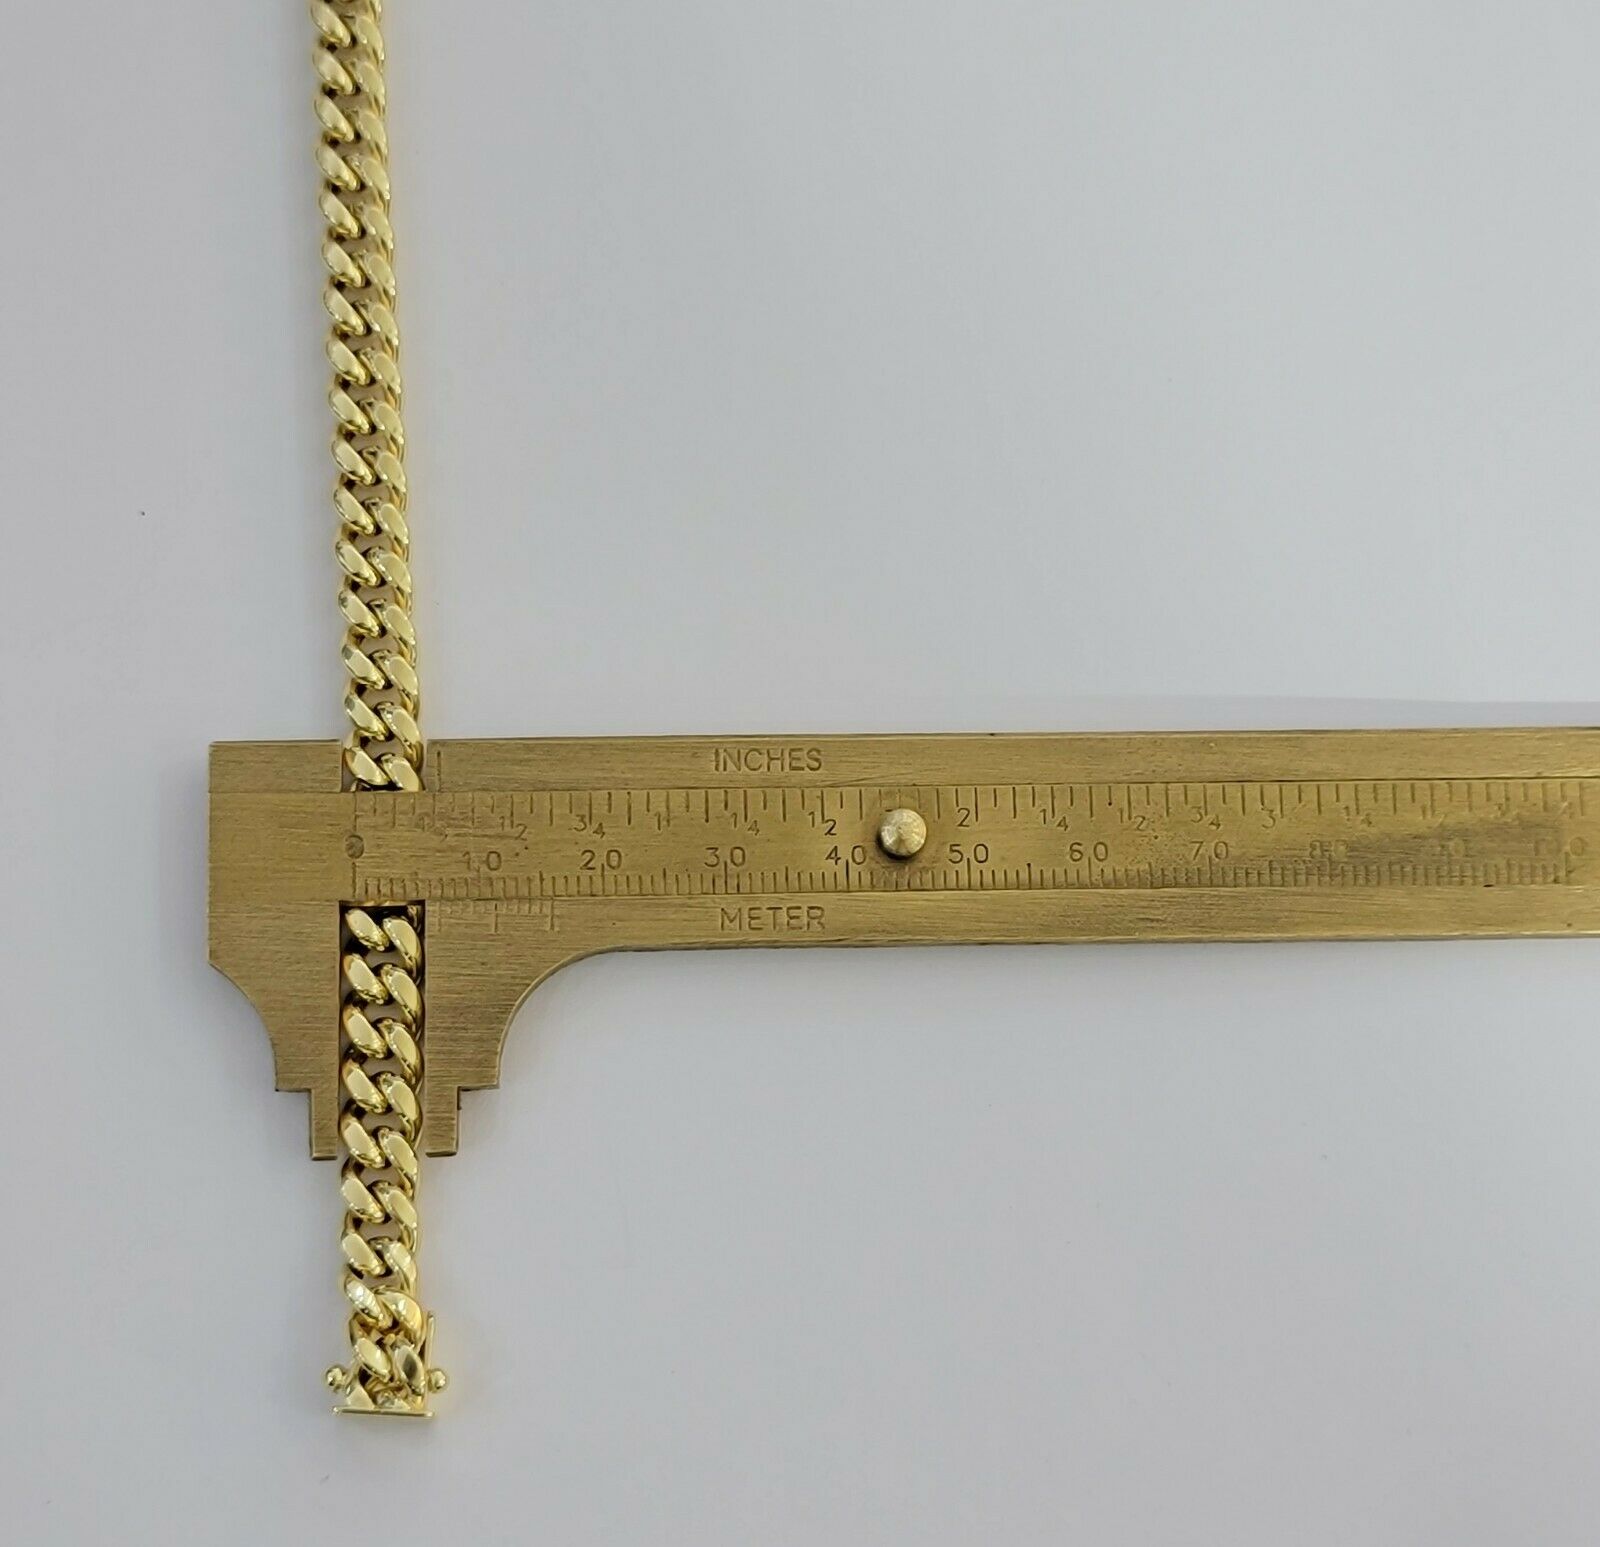 10k Yellow Gold Bracelet Miami Cuban Link 7.5